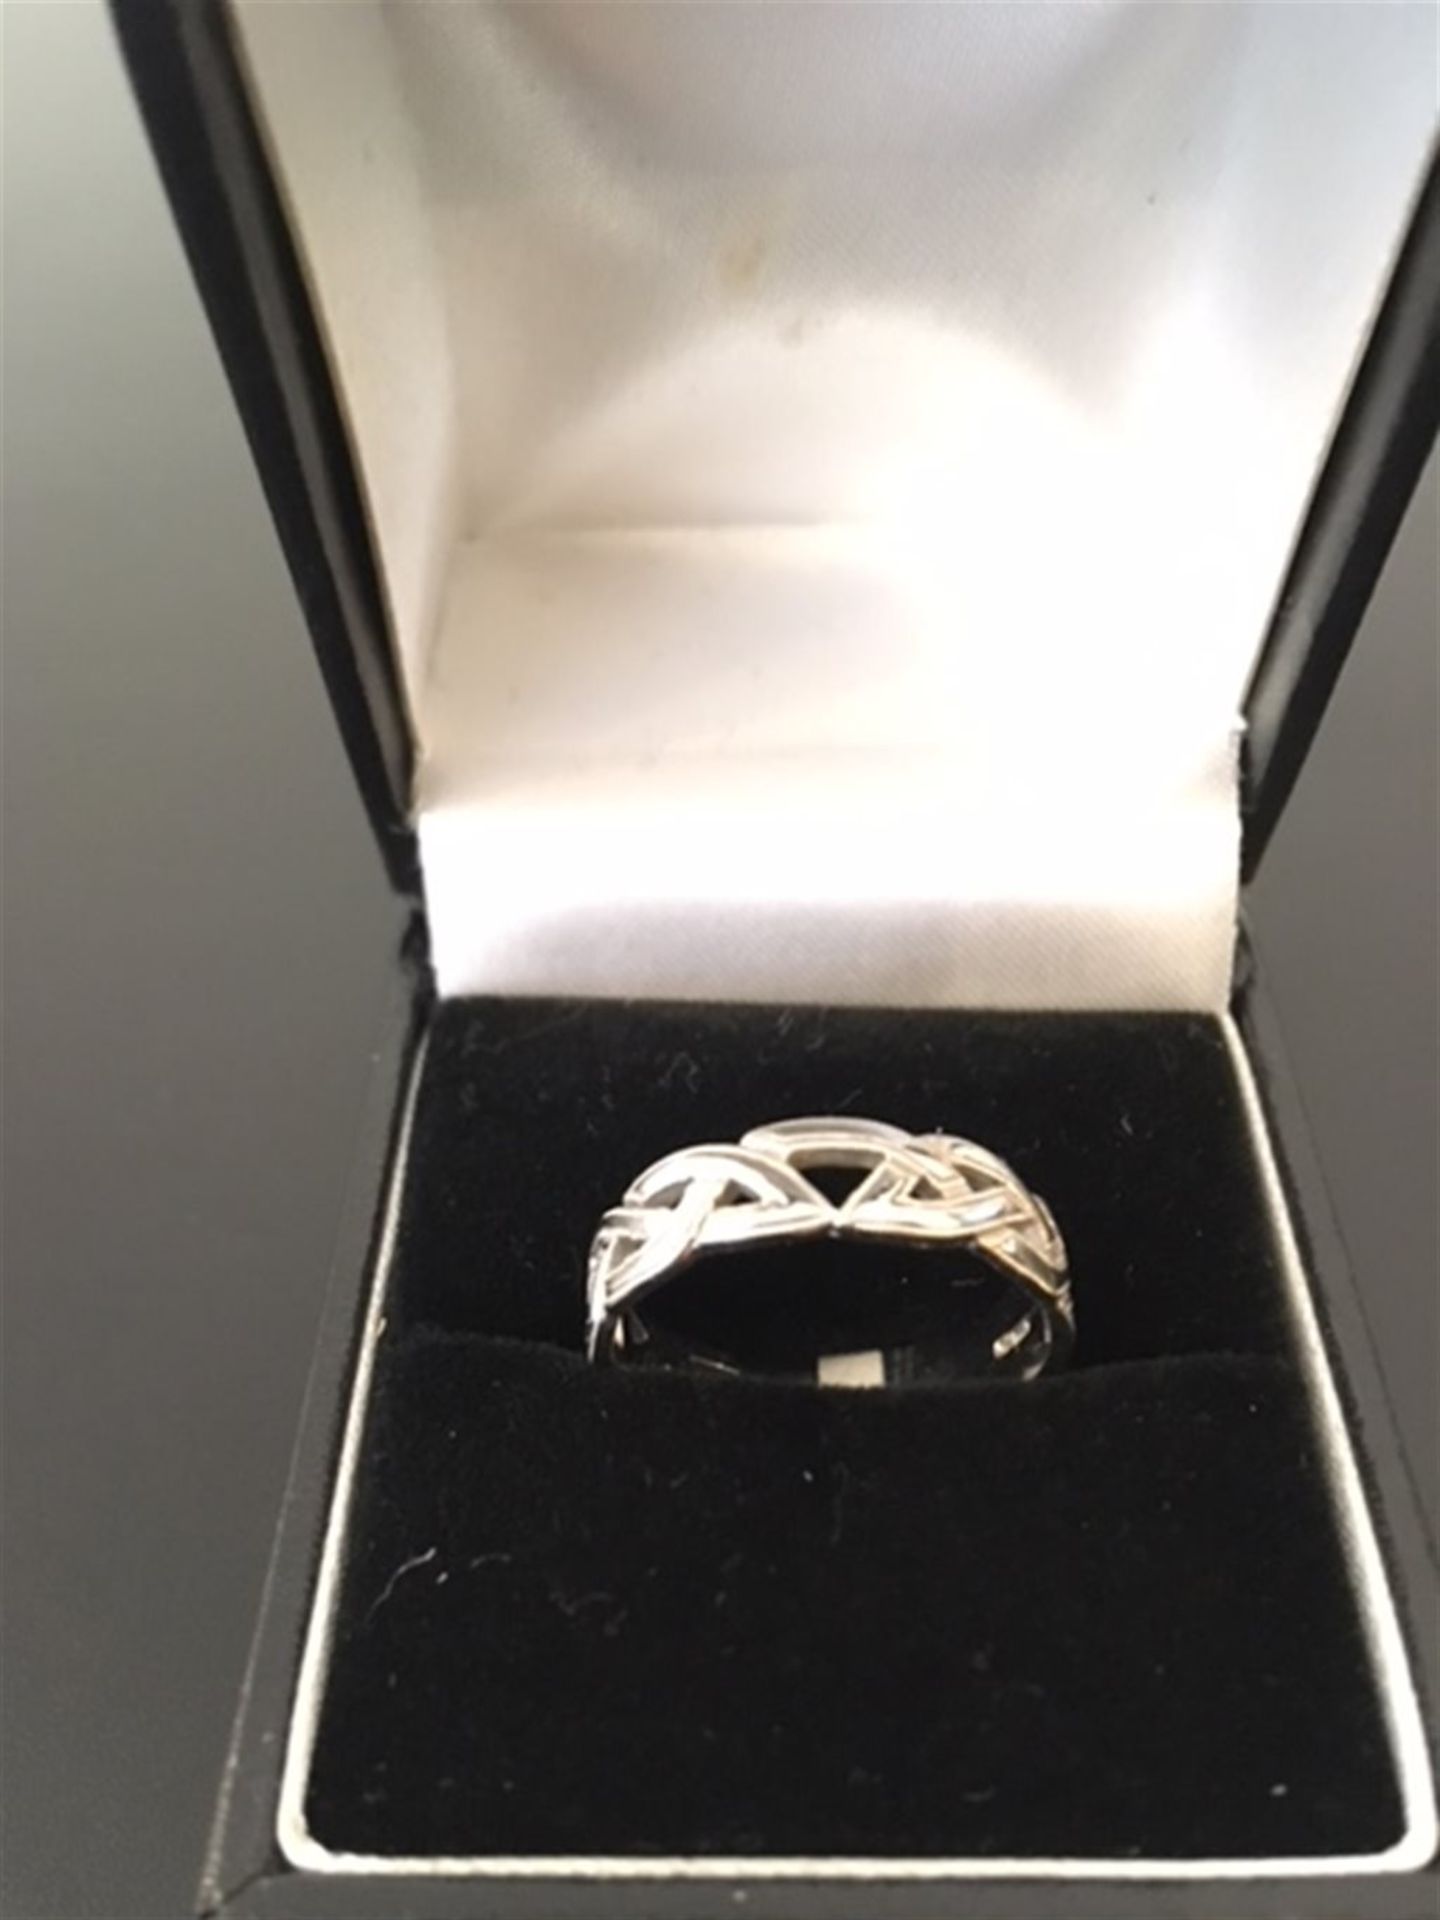 5mm Celtic wedding ring - Image 2 of 2